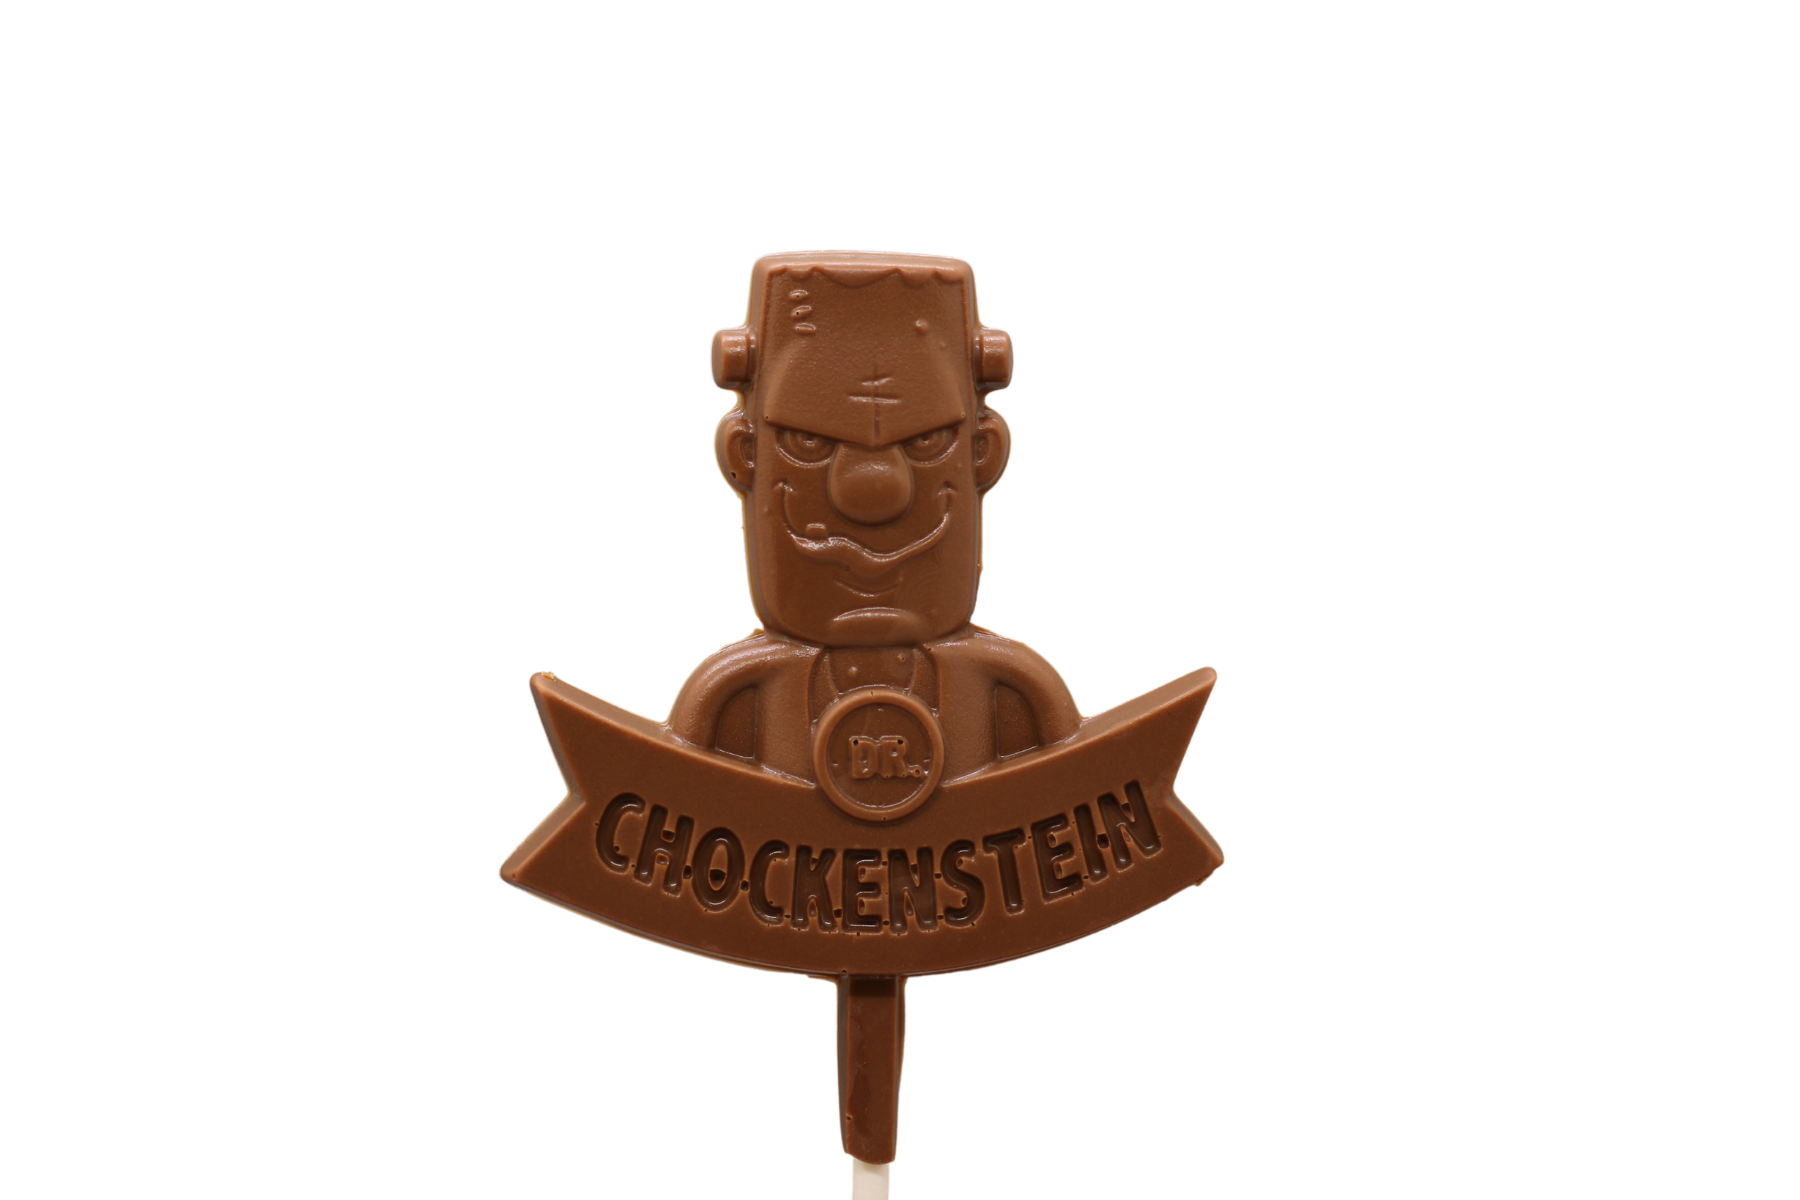 Dr. Chockenstein Milk Chocolate Pop - Creamy Halloween delight with a unique Frankenstein design and individual packaging.